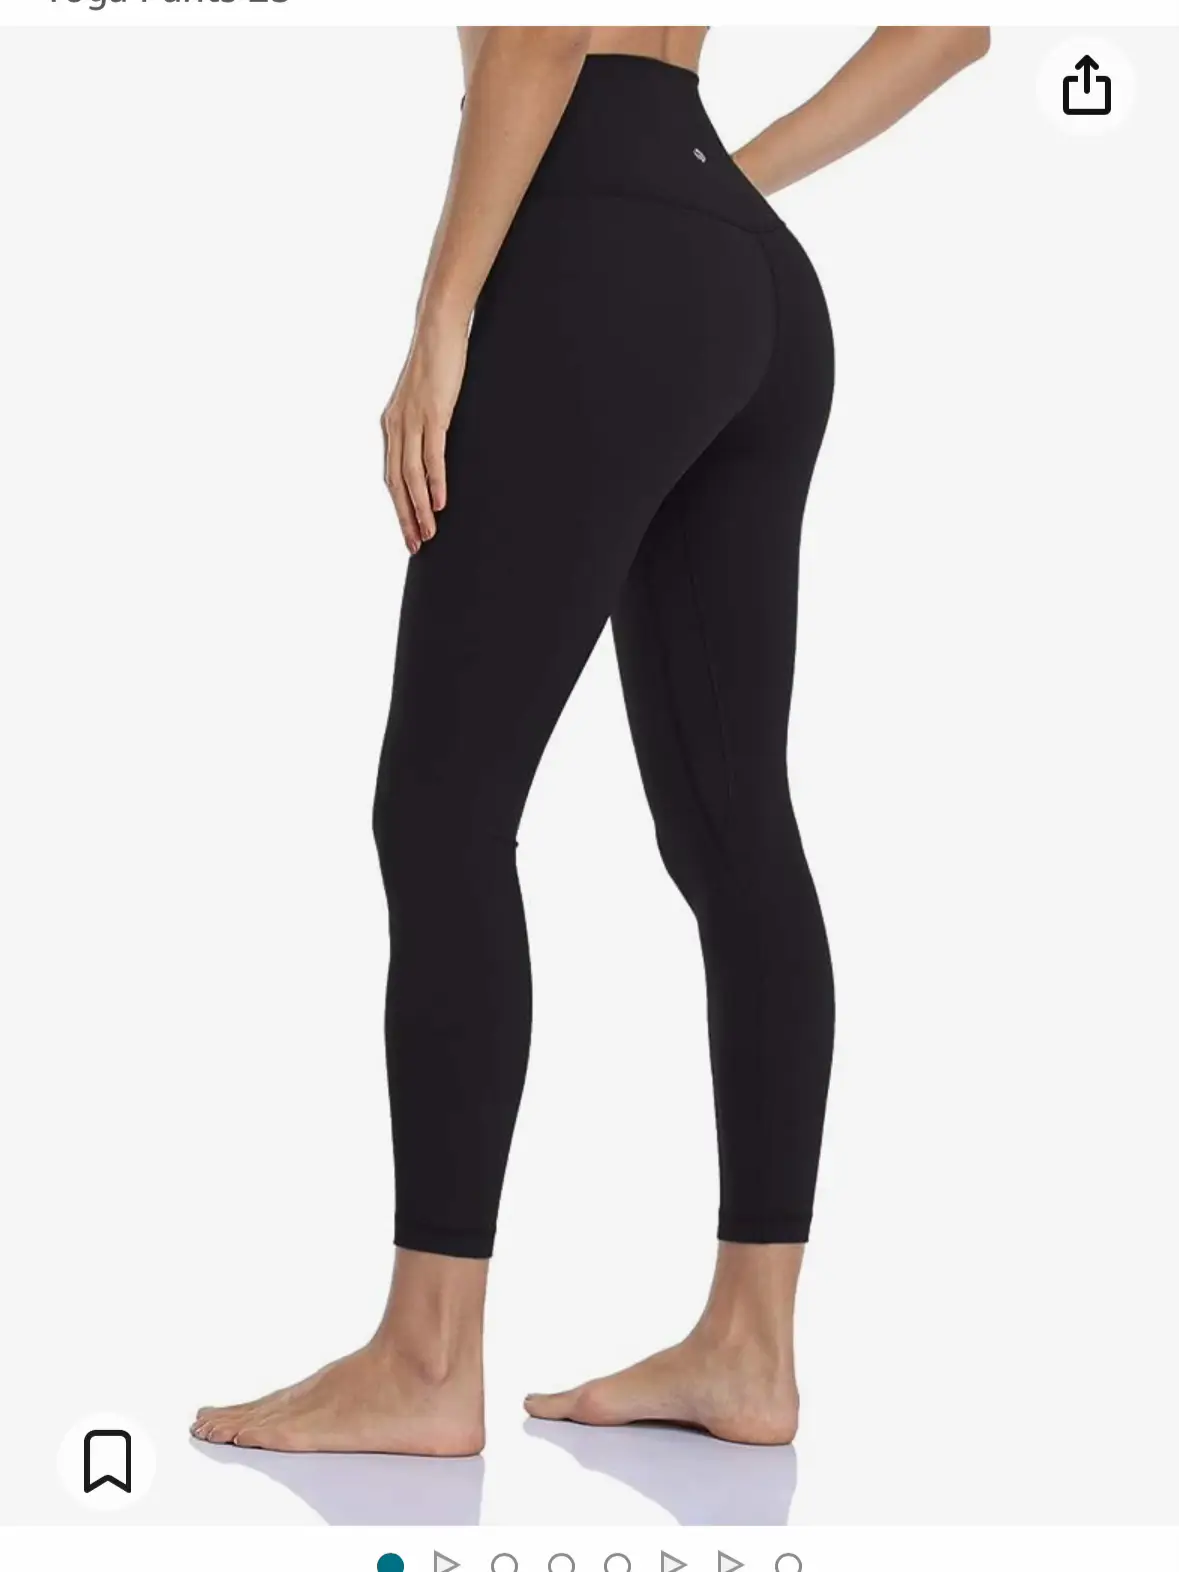 Crz Yoga V- Amelia Leggings Black And White High Waist Size XL